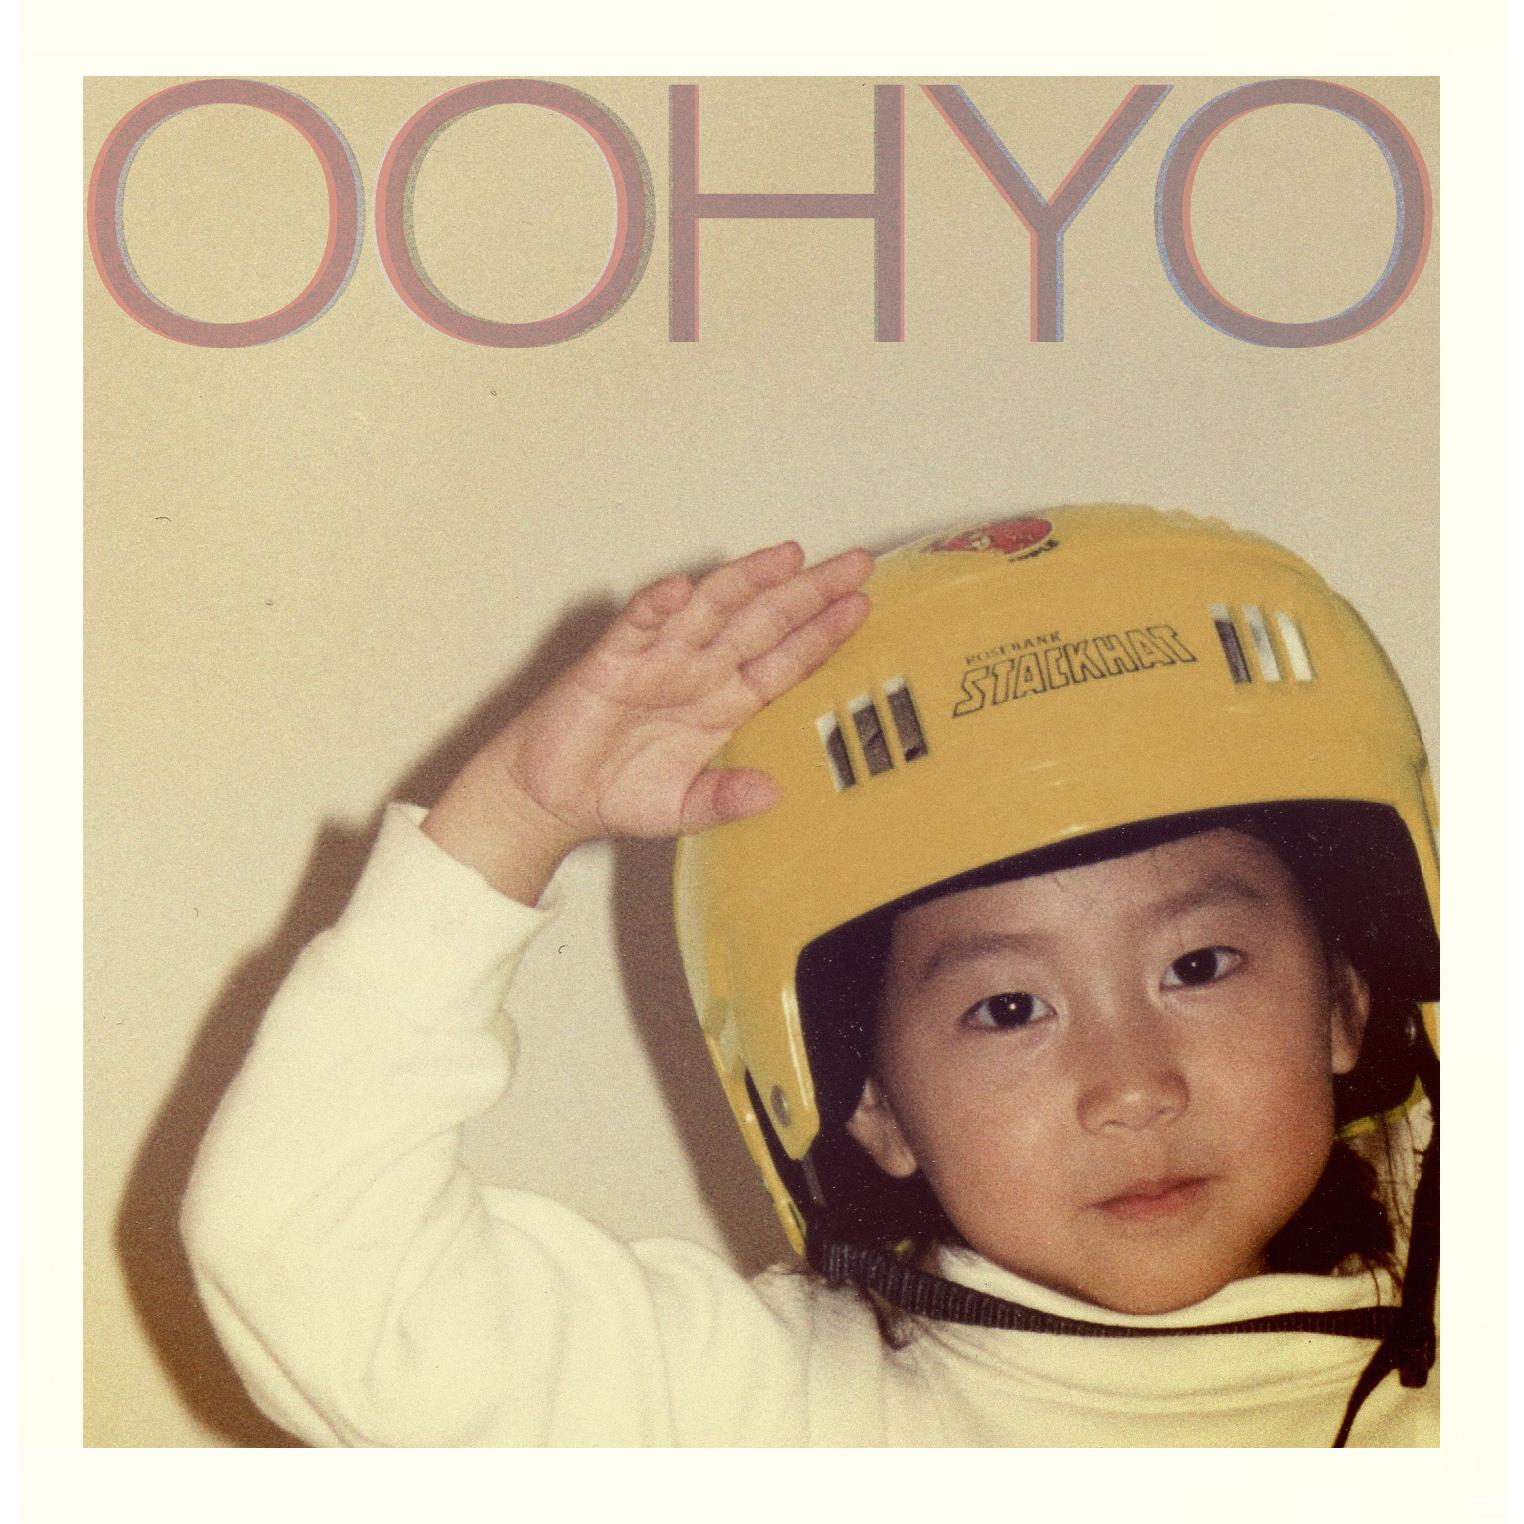 Oohyo - Vineyard (English ver.)